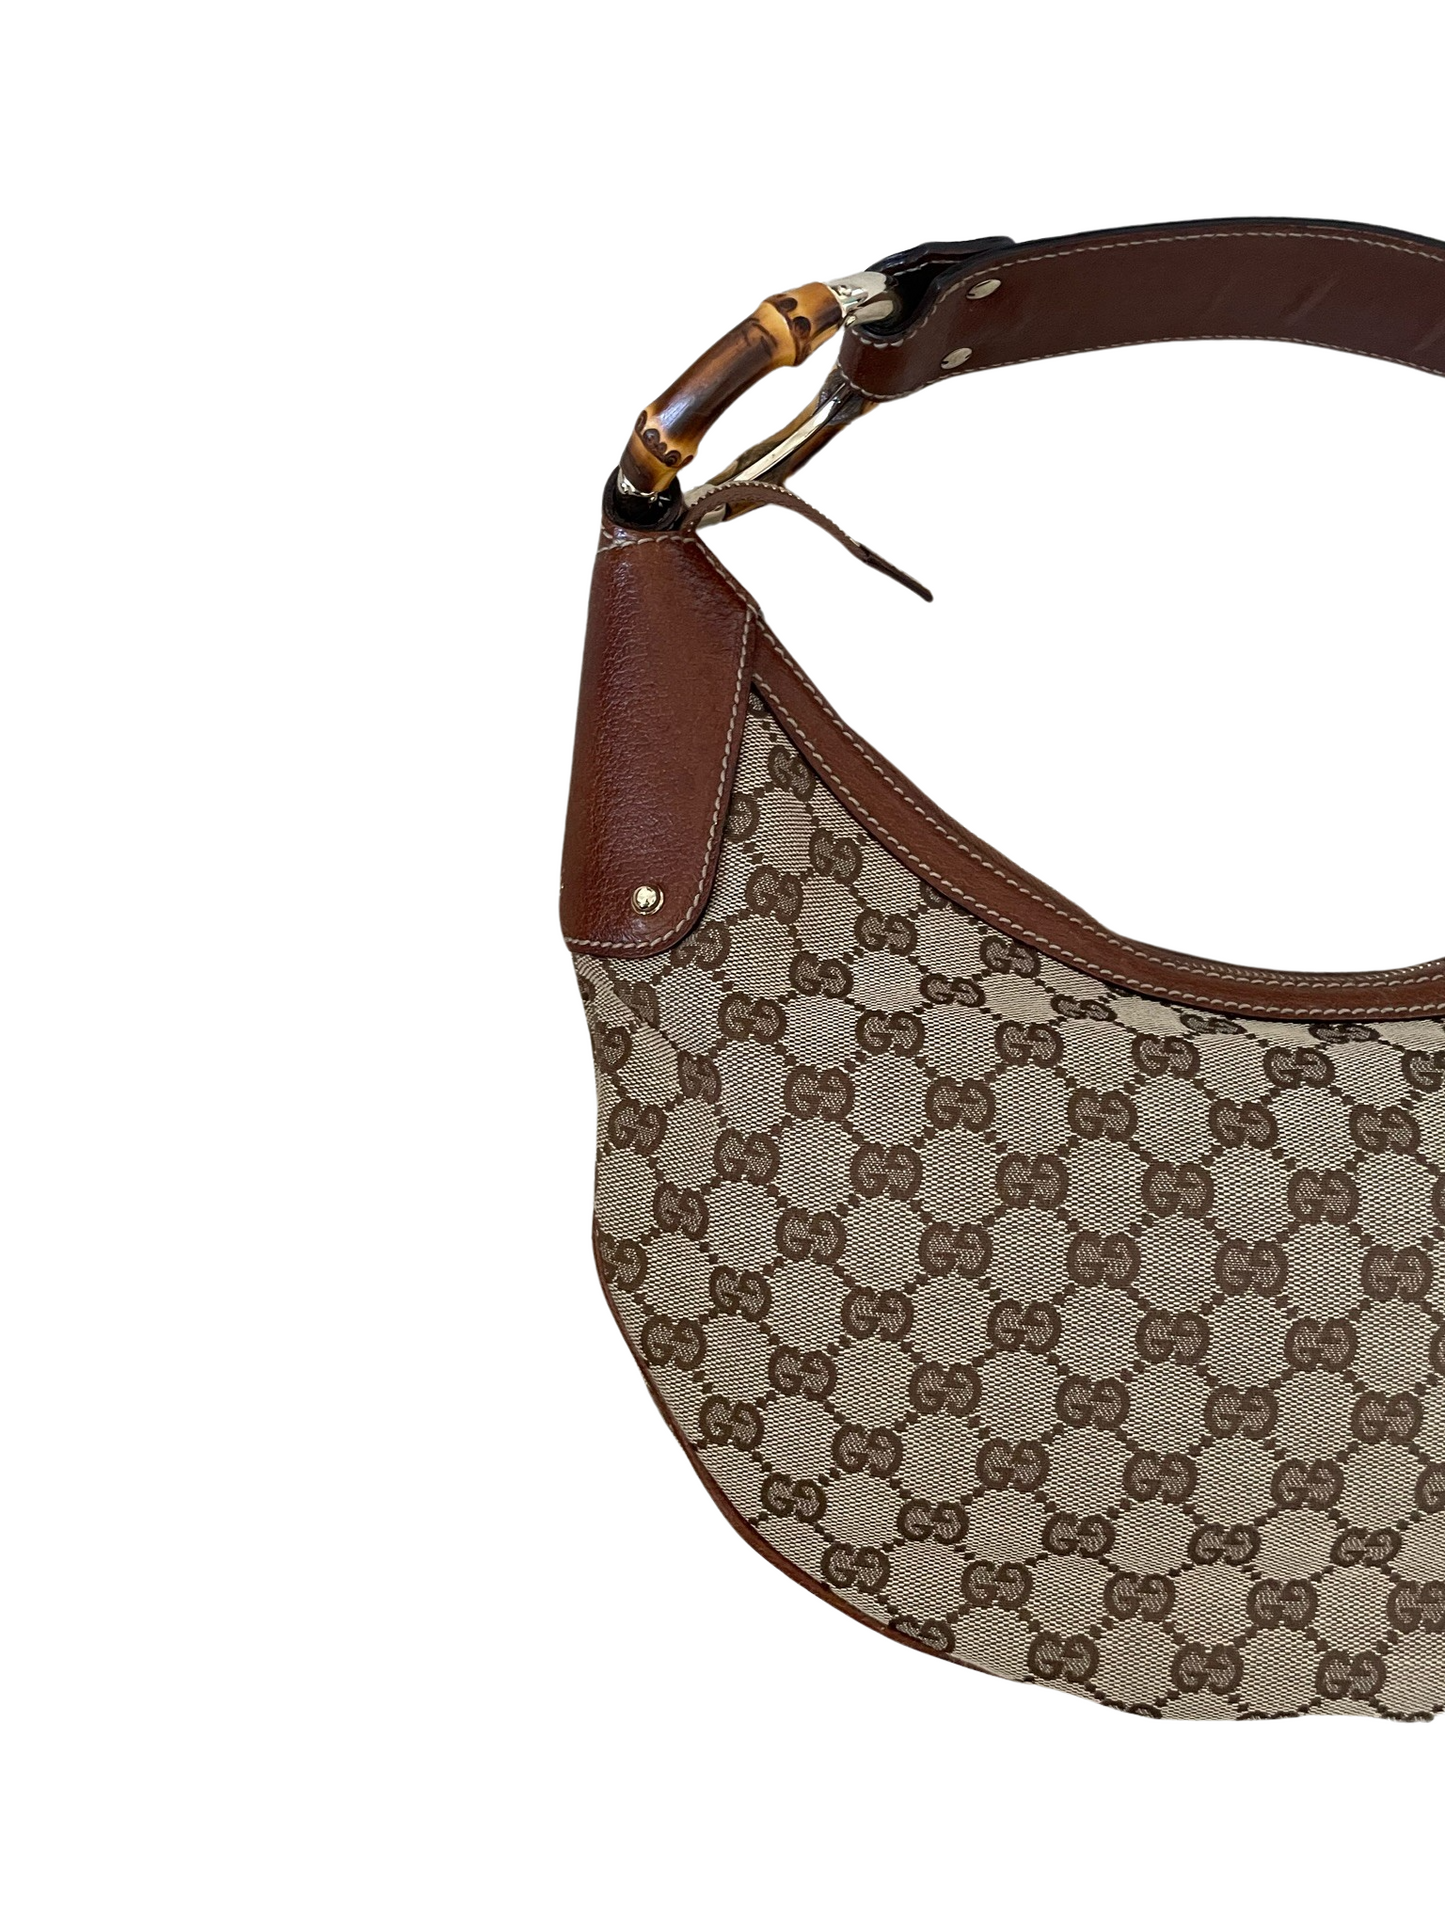 Gucci GG Bamboo Beige & Dark Brown Jacquard & Leather Handbag